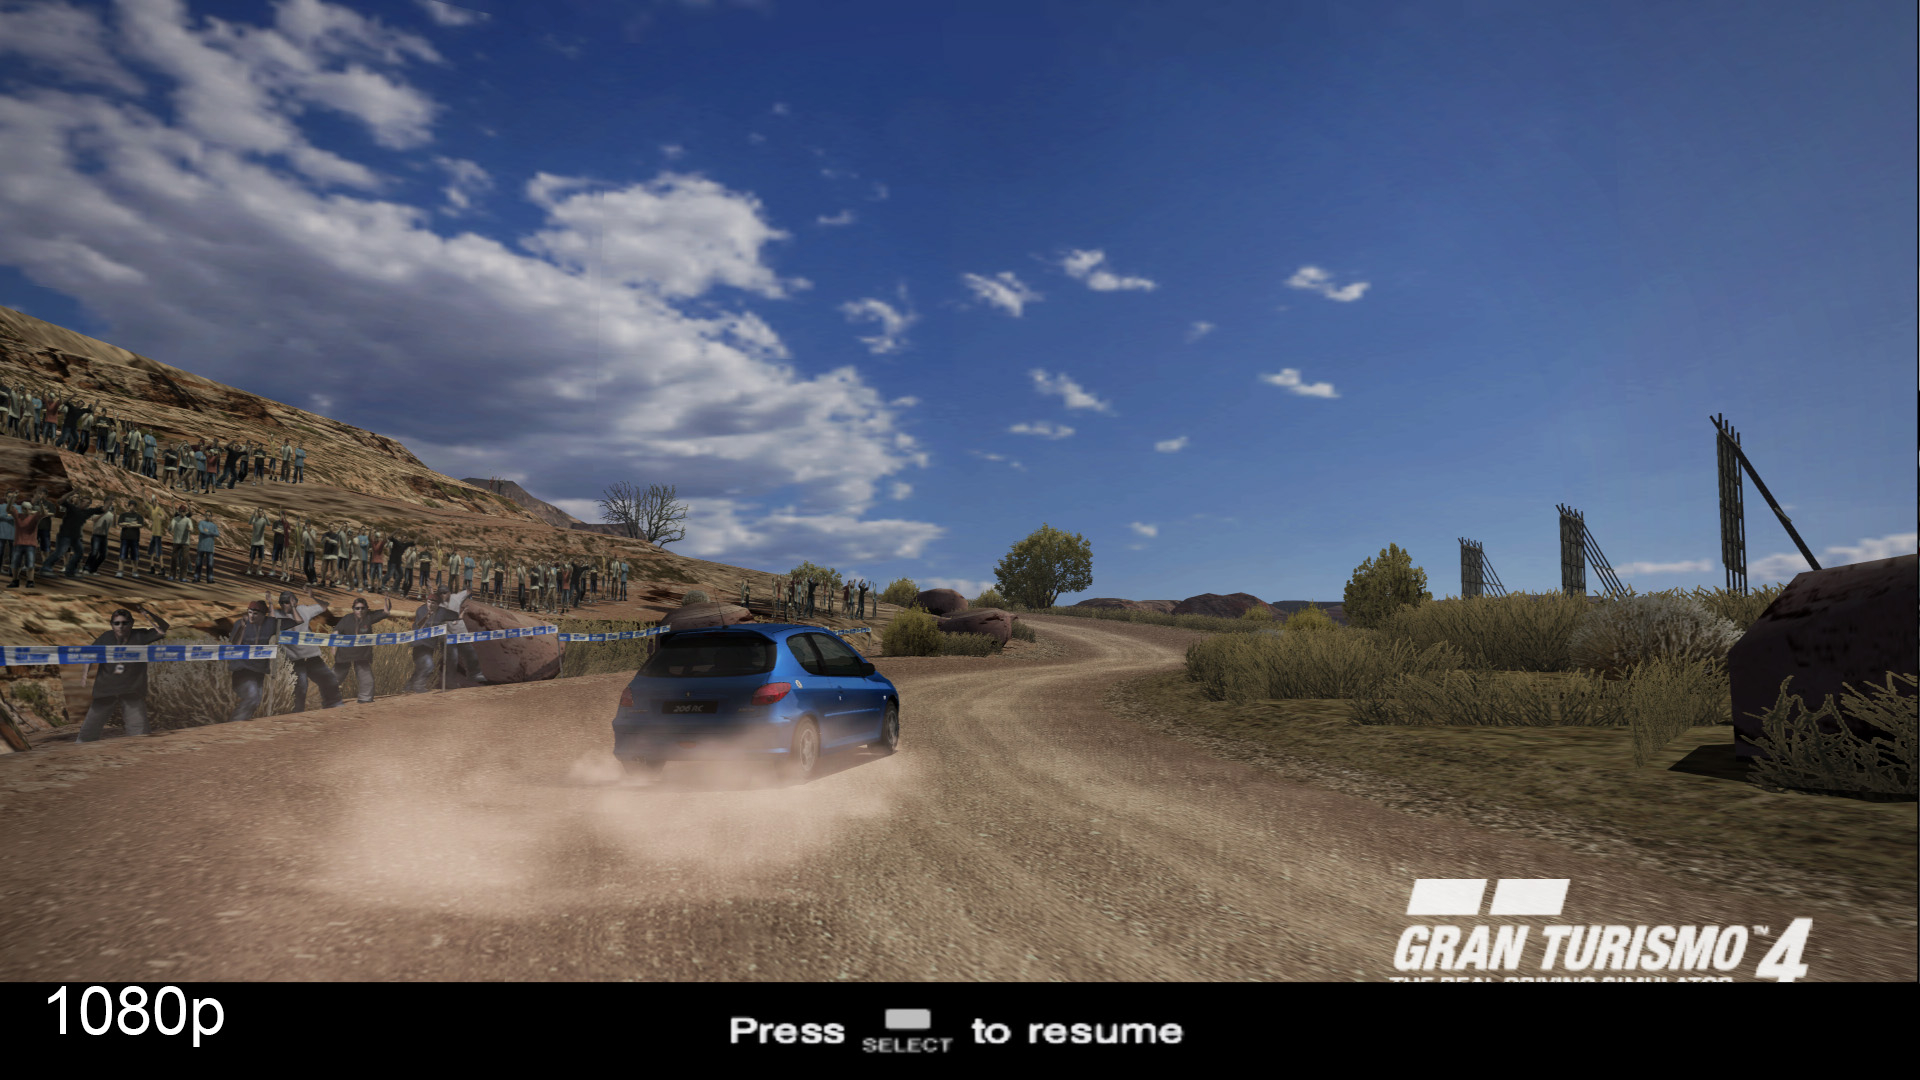 All Cars Gran Turismo 4 PCSX2 Emulator 